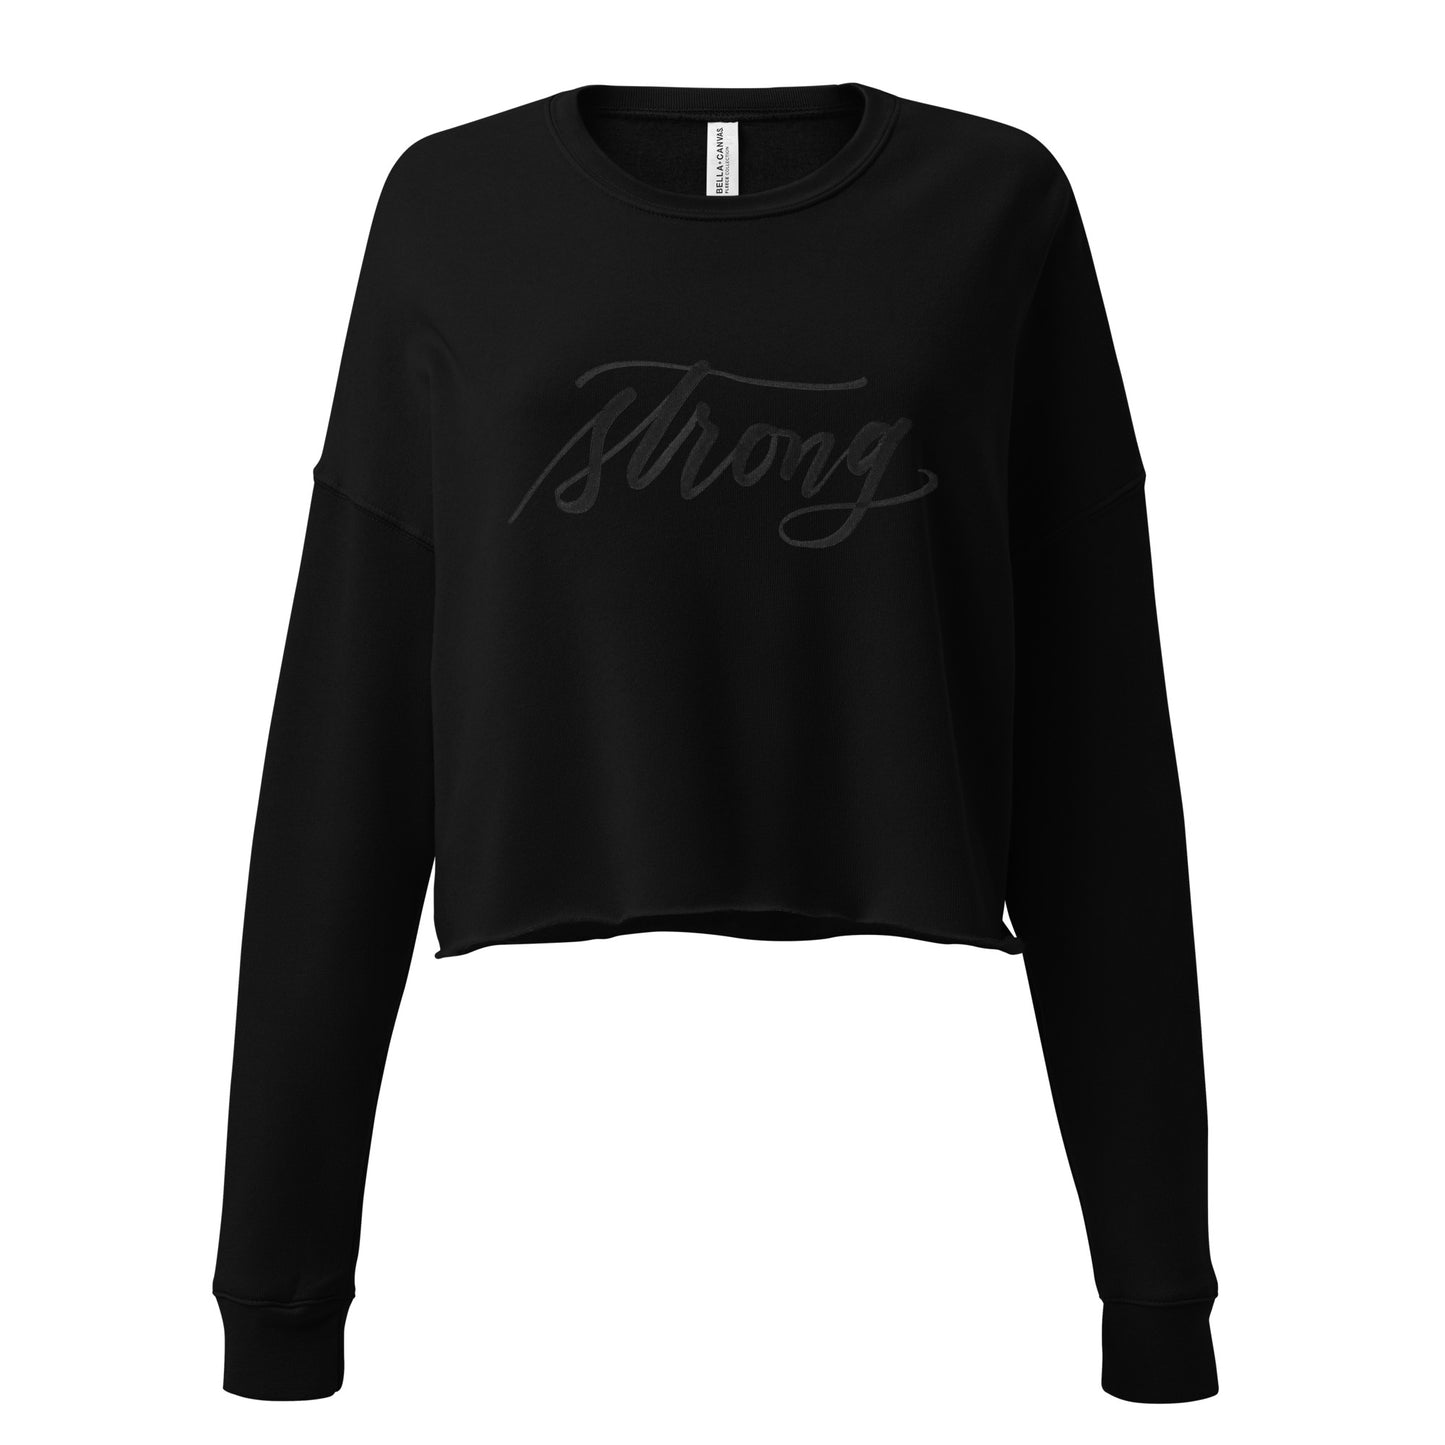 Black Script "Strong" Calligraphy Printed on Black Fleece Crop Sweatshirt